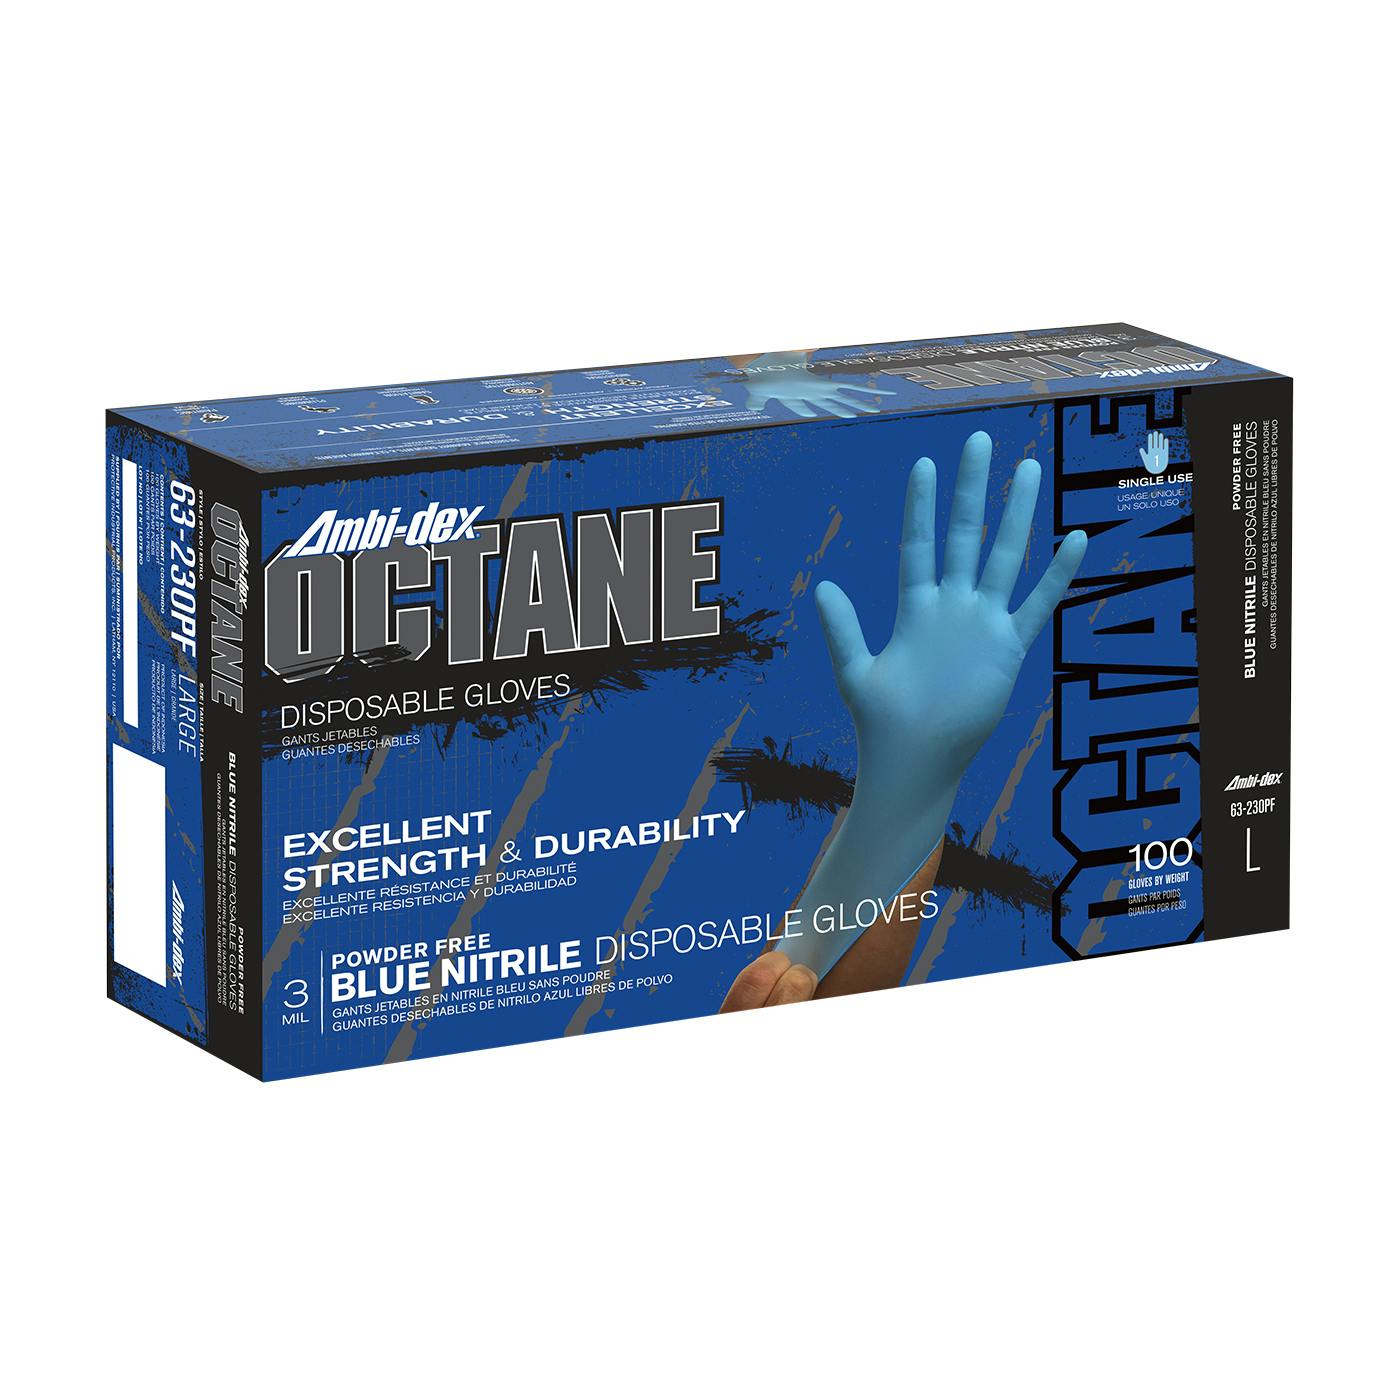 Ambi-dex® Octane Disposable Nitrile Glove, Powder Free with Textured Grip - 3 mil (63-230PF)